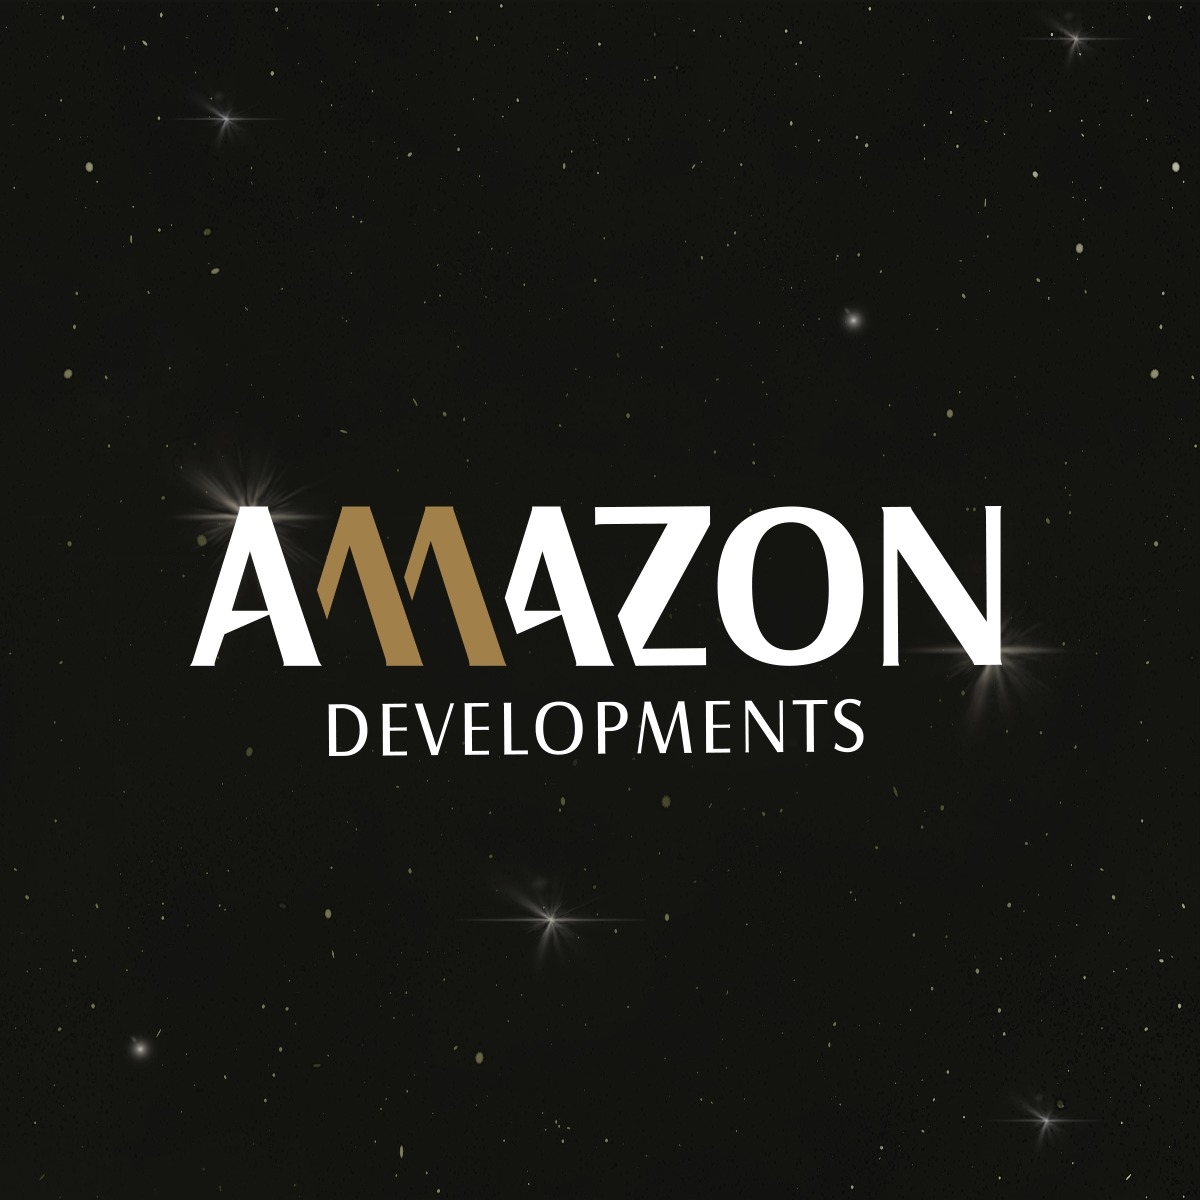 Amazon Developments Company